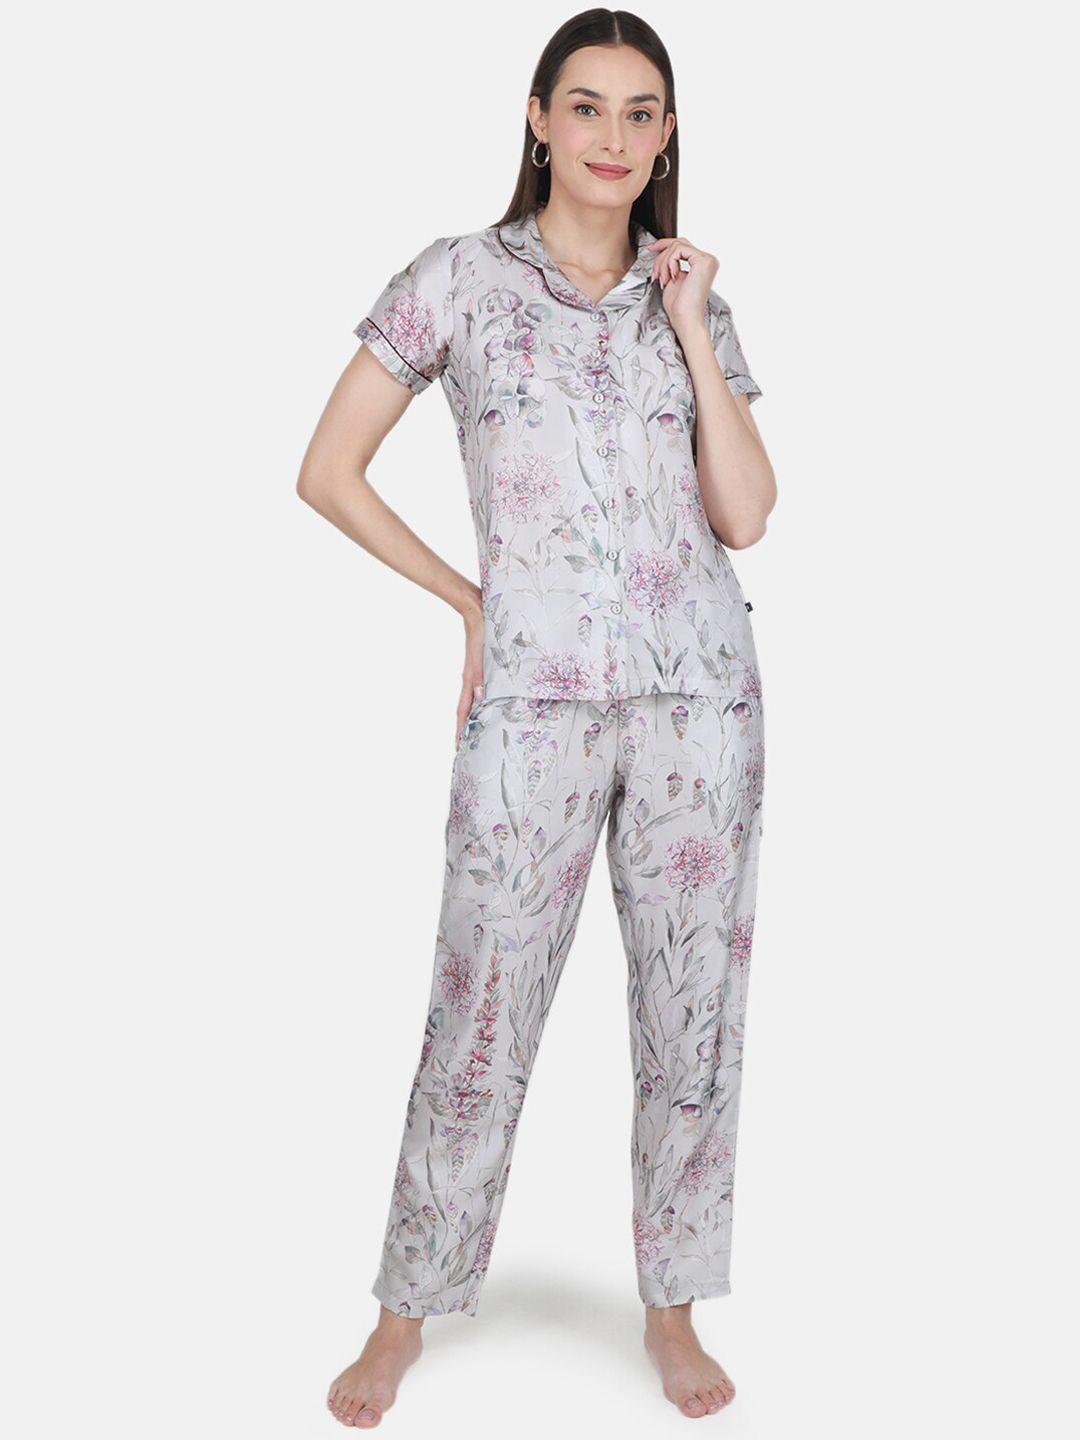 monte carlo floral printed night suit